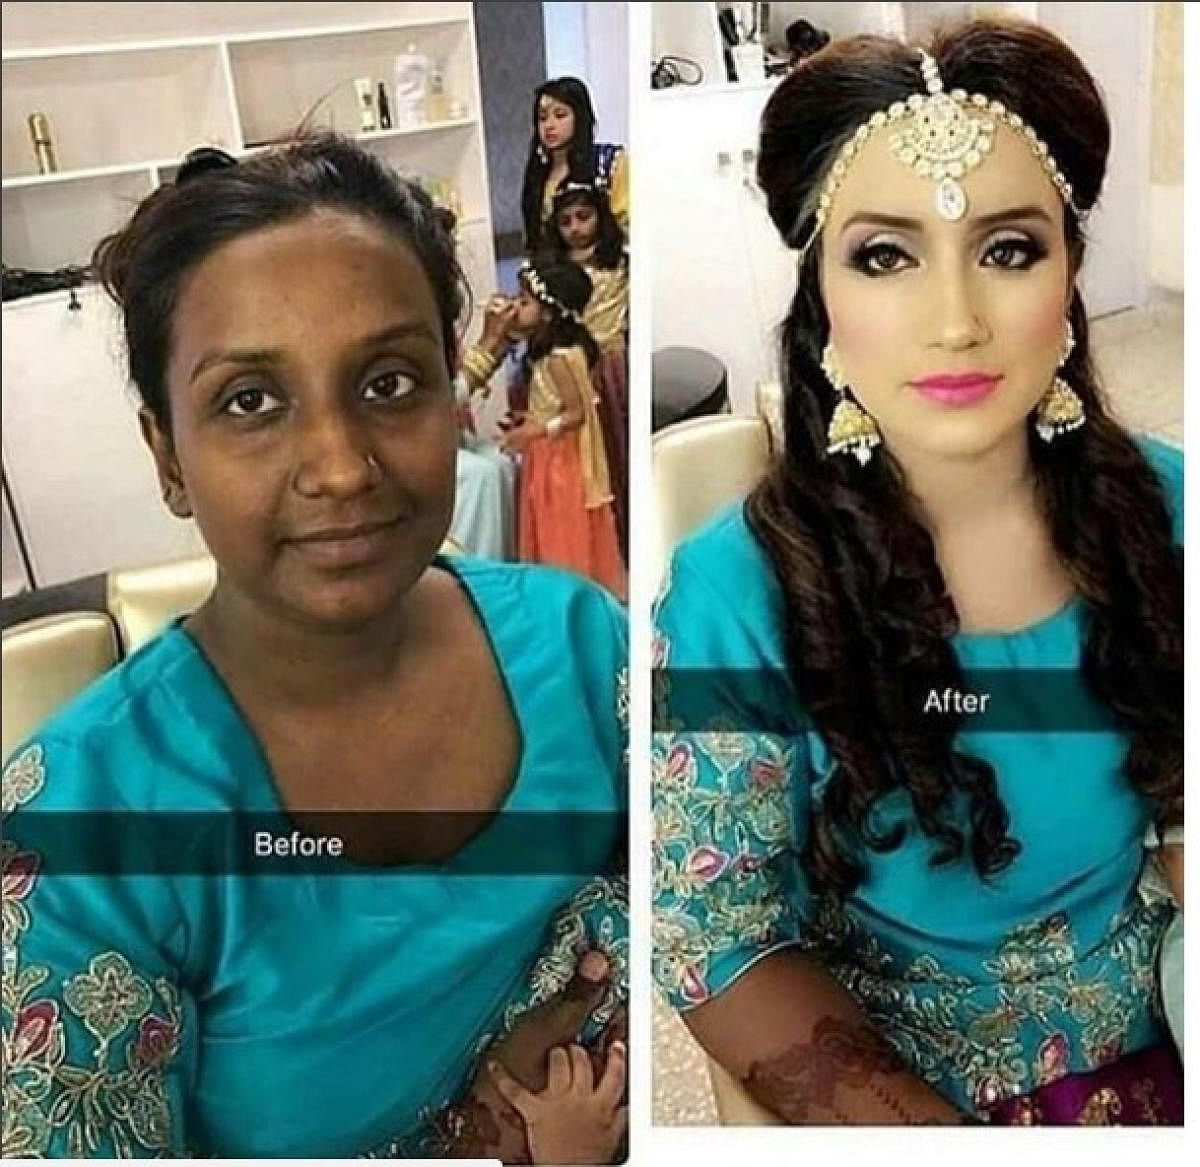 For Indian brides, fair skin is still lovely